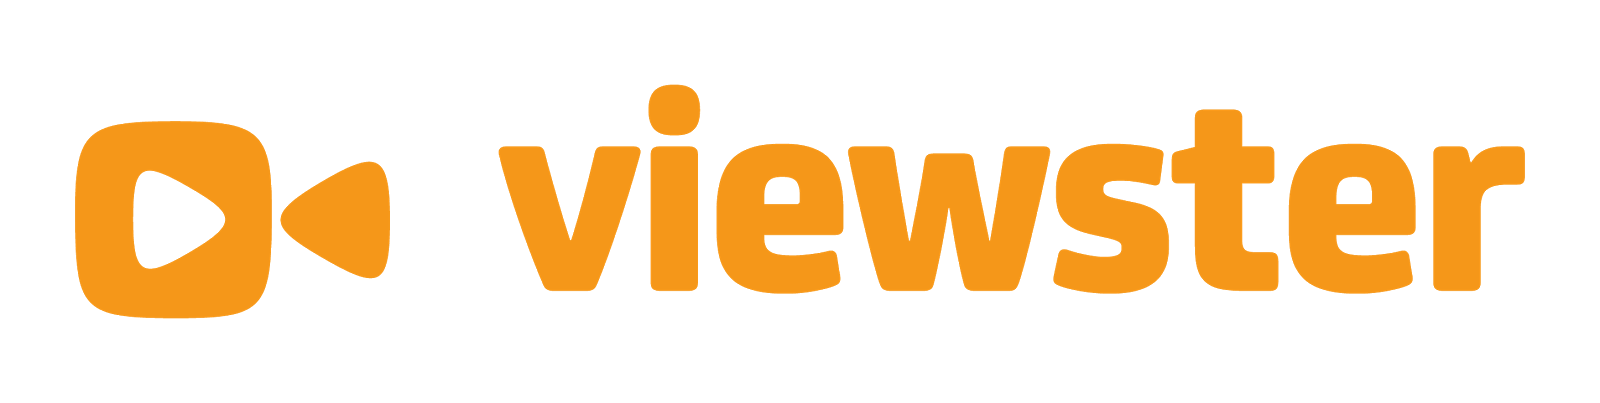 Viewster-logo.png